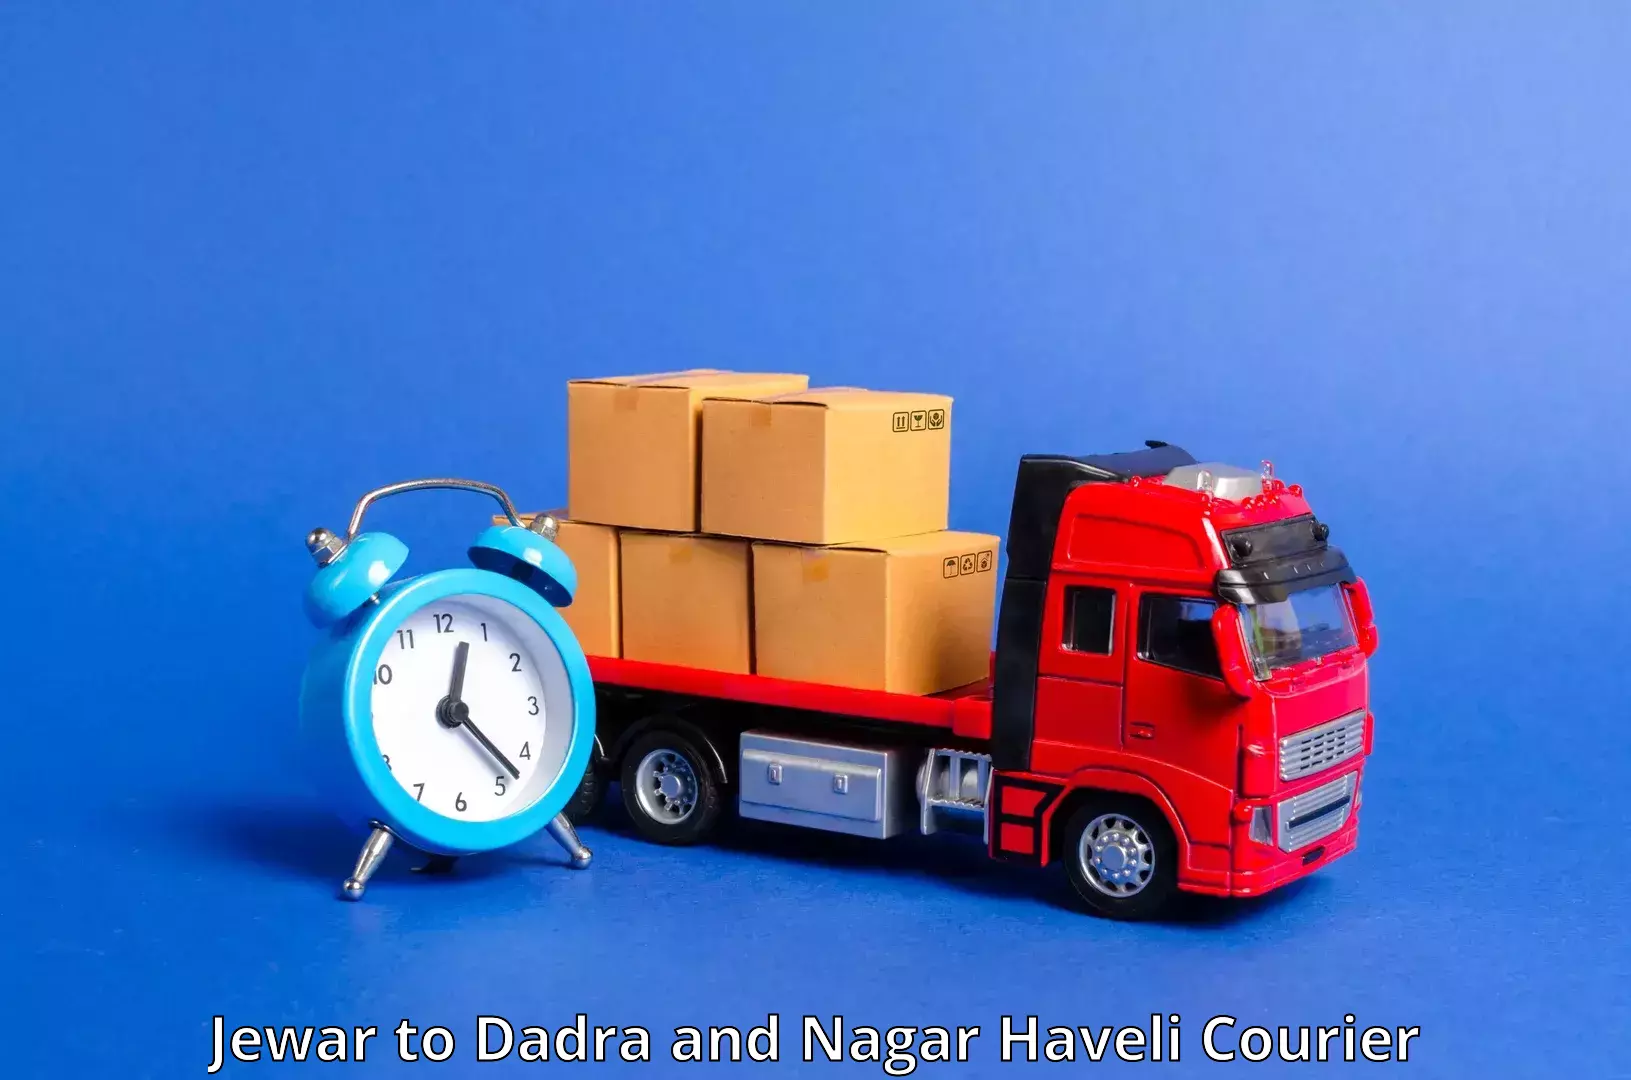 Large package courier Jewar to Silvassa